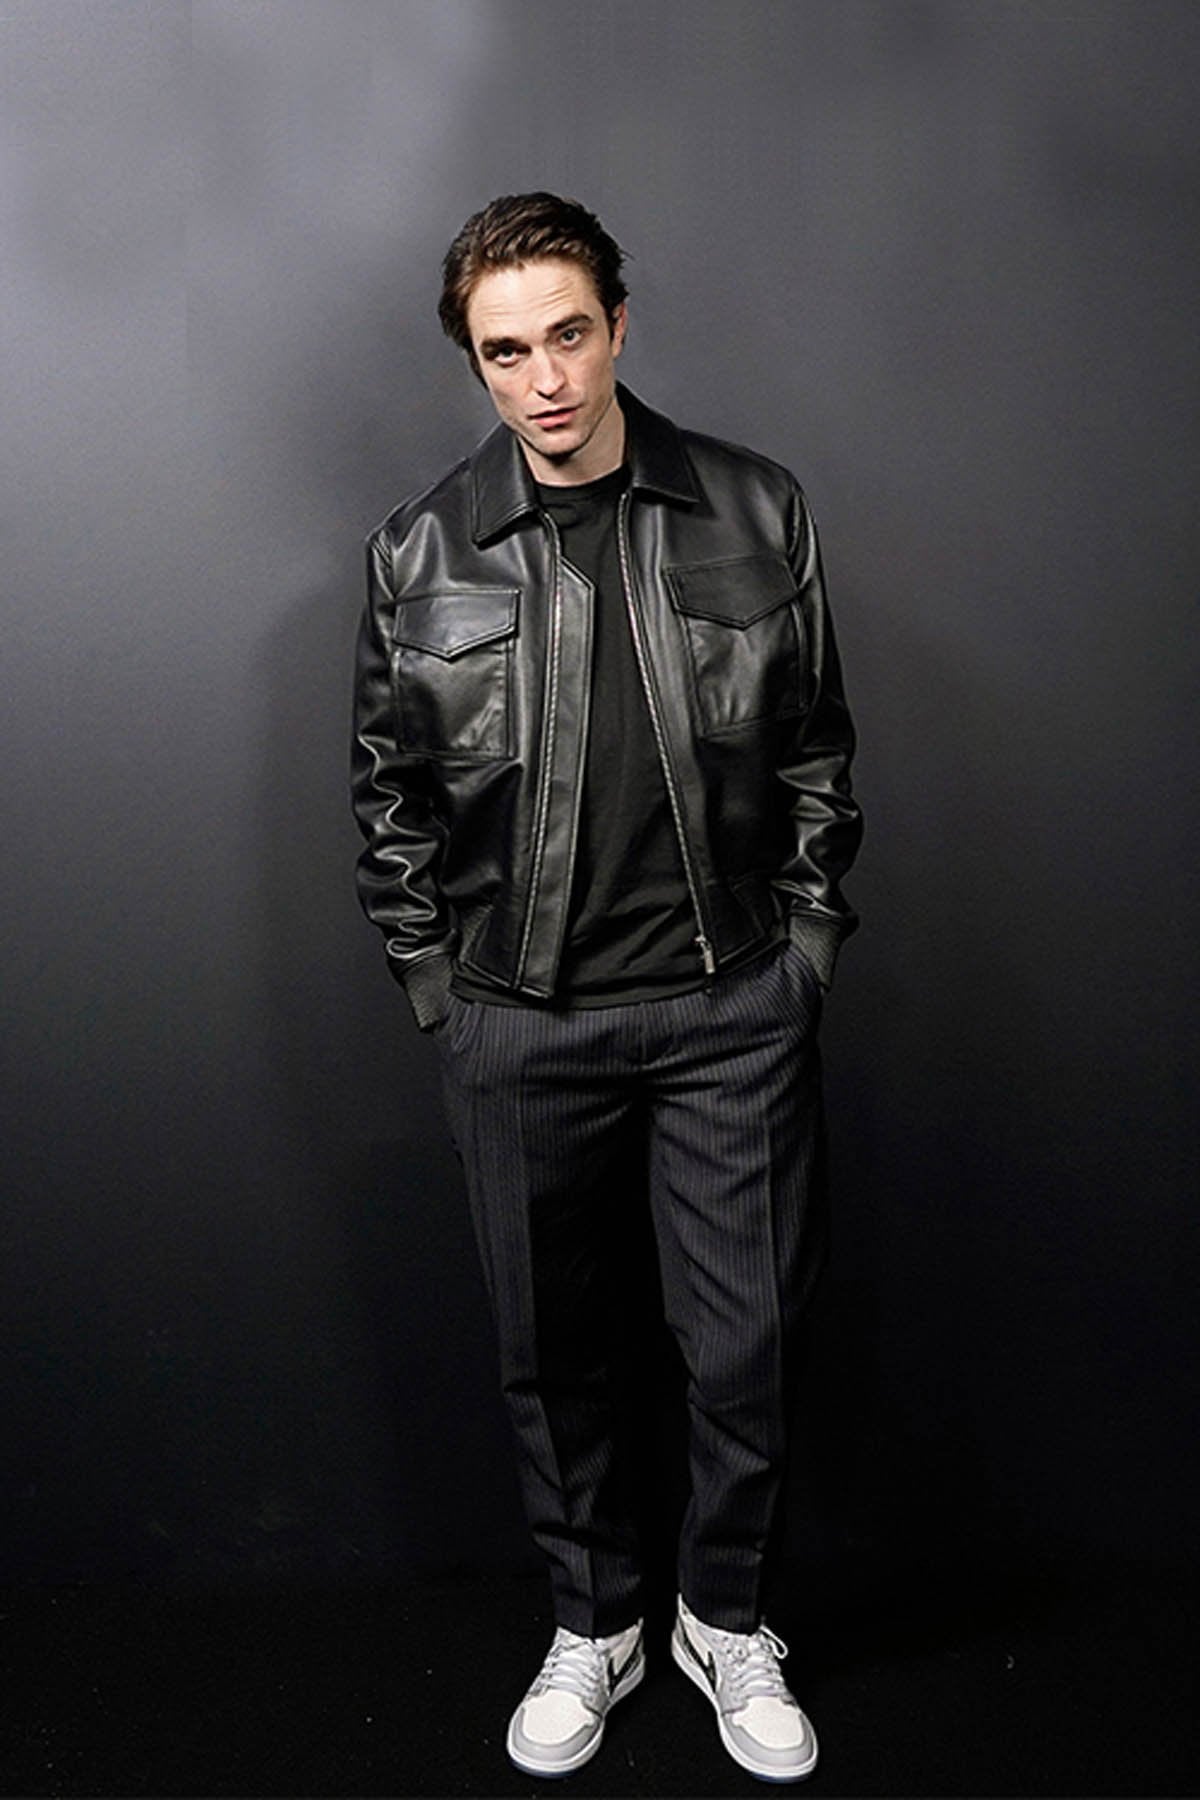 Robert Pattinson Stylish Leather Jacket